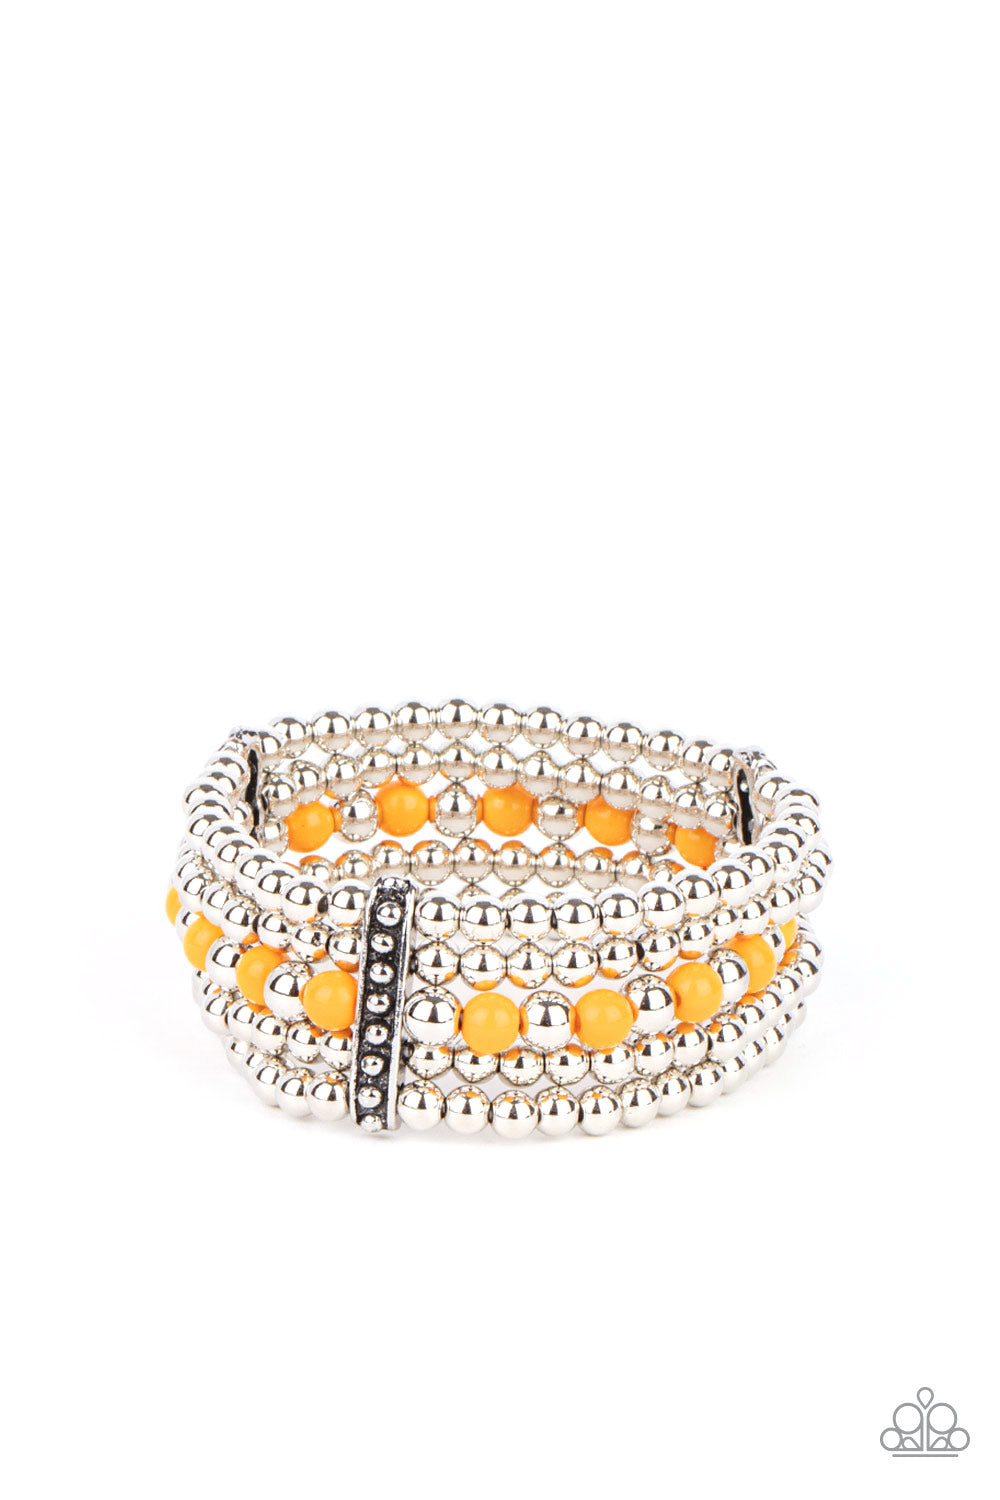 Paparazzi Accessories - Gloss Over The Details - Orange Bracelet - Alies Bling Bar